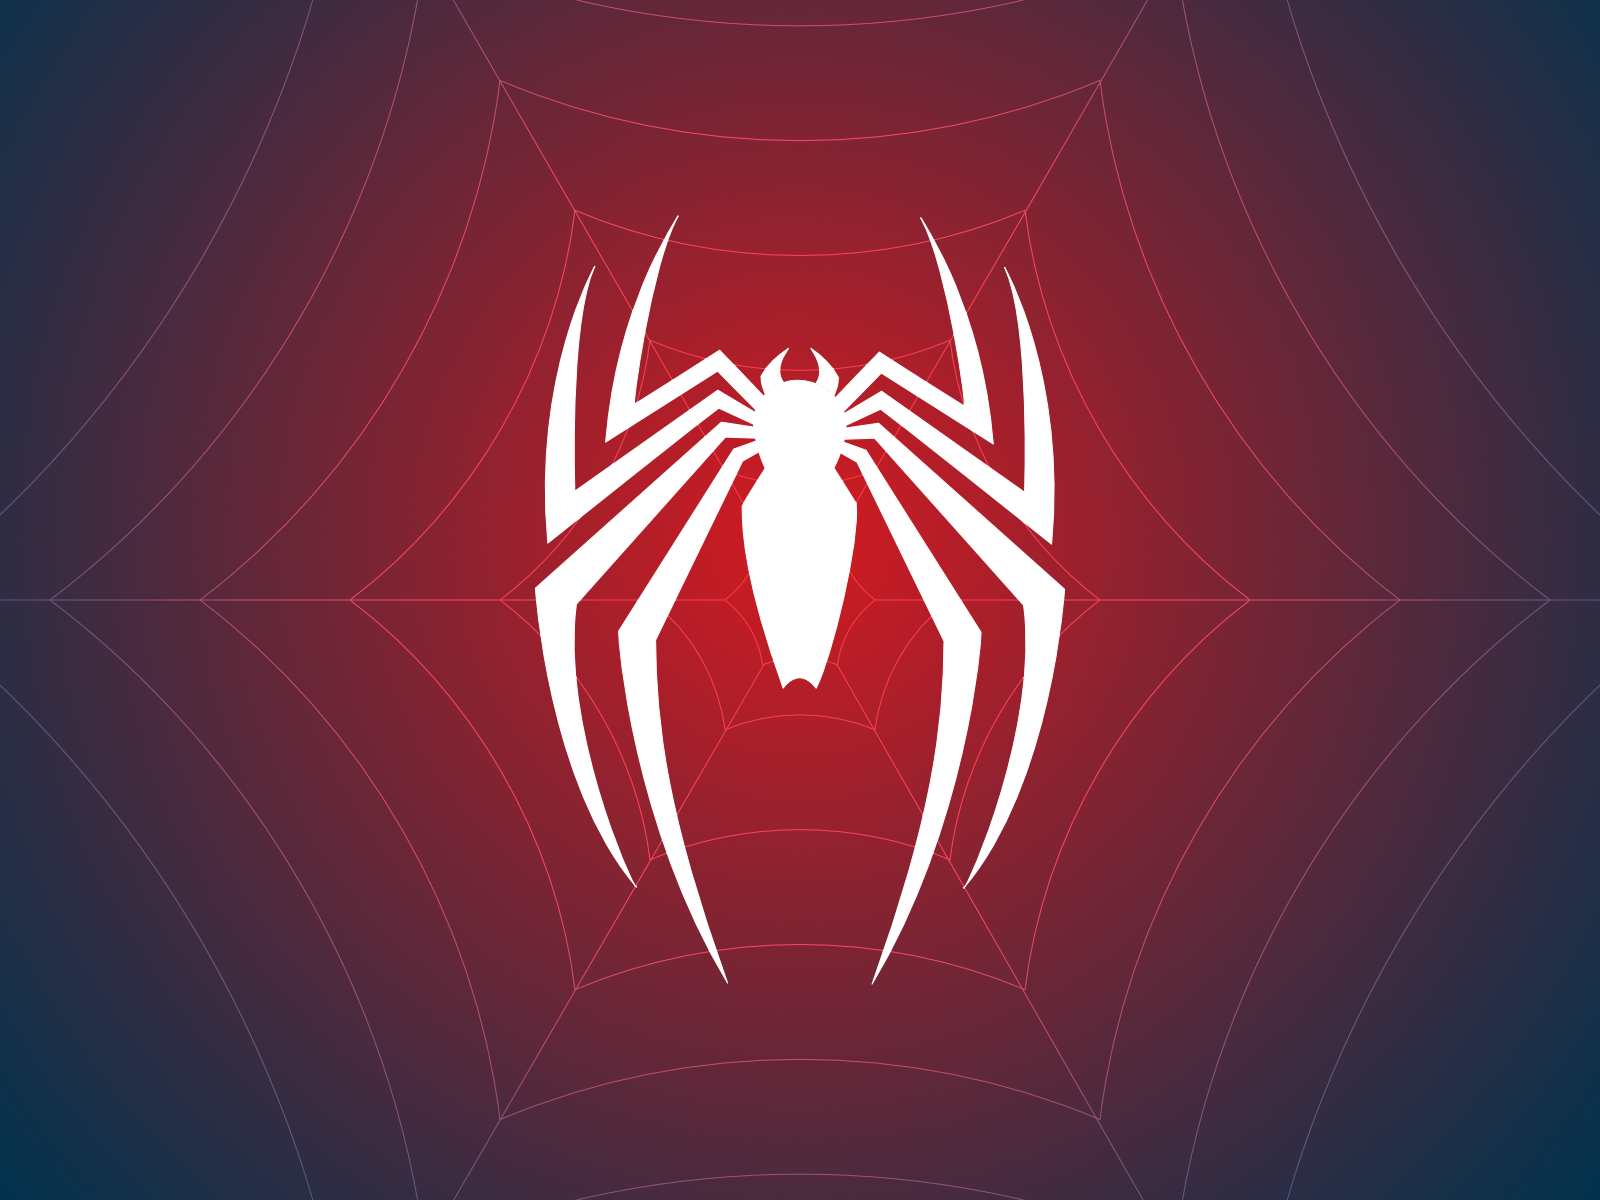 Spiderman Logo by Yusif Alomeri on Dribbble